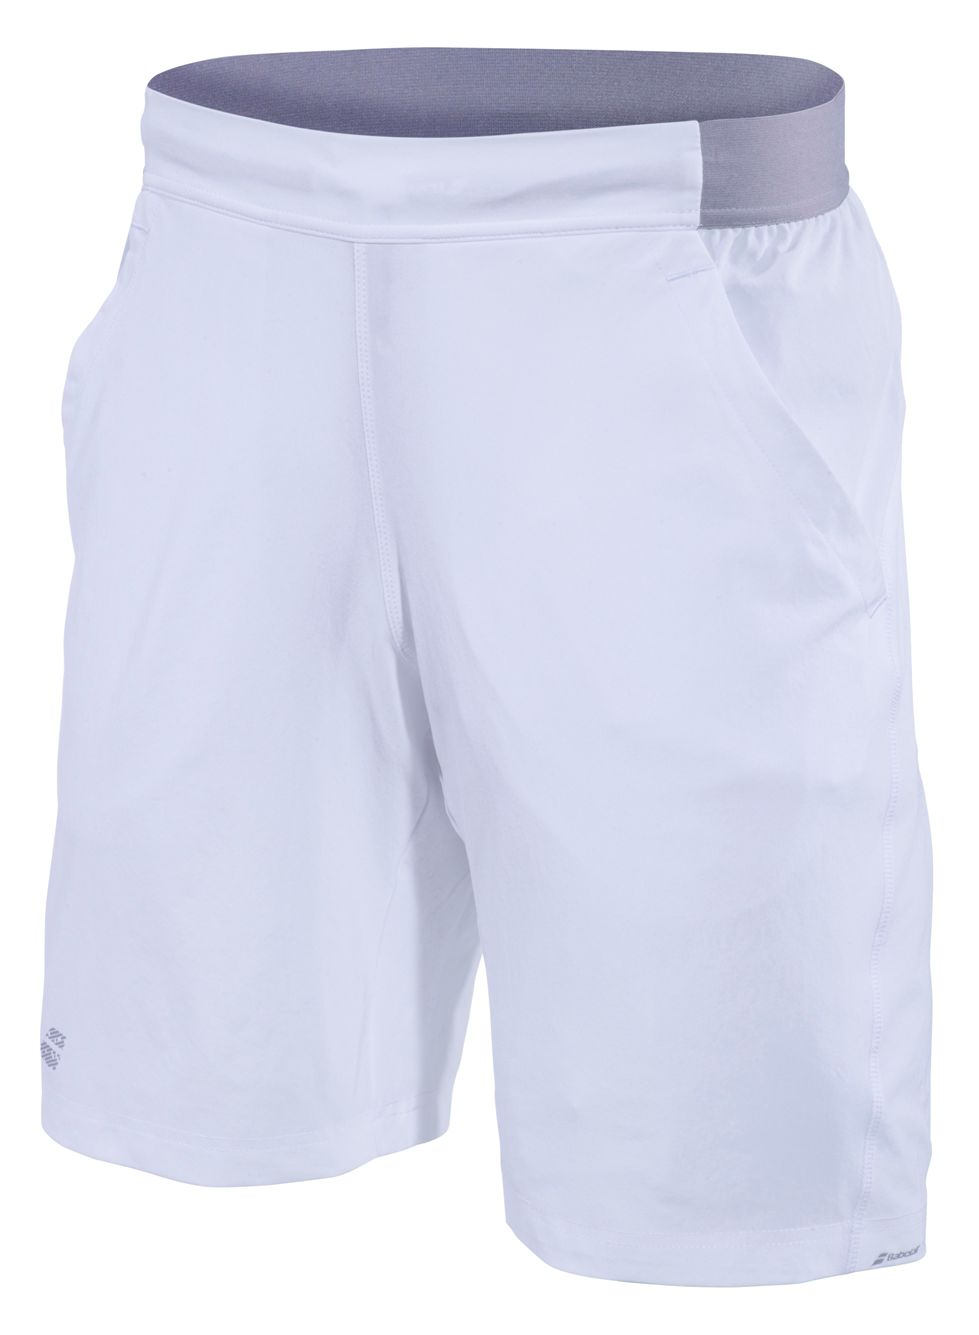 Babolat Men's Performance XLong 9 Inch Tennis Short (White/White) - Do ...